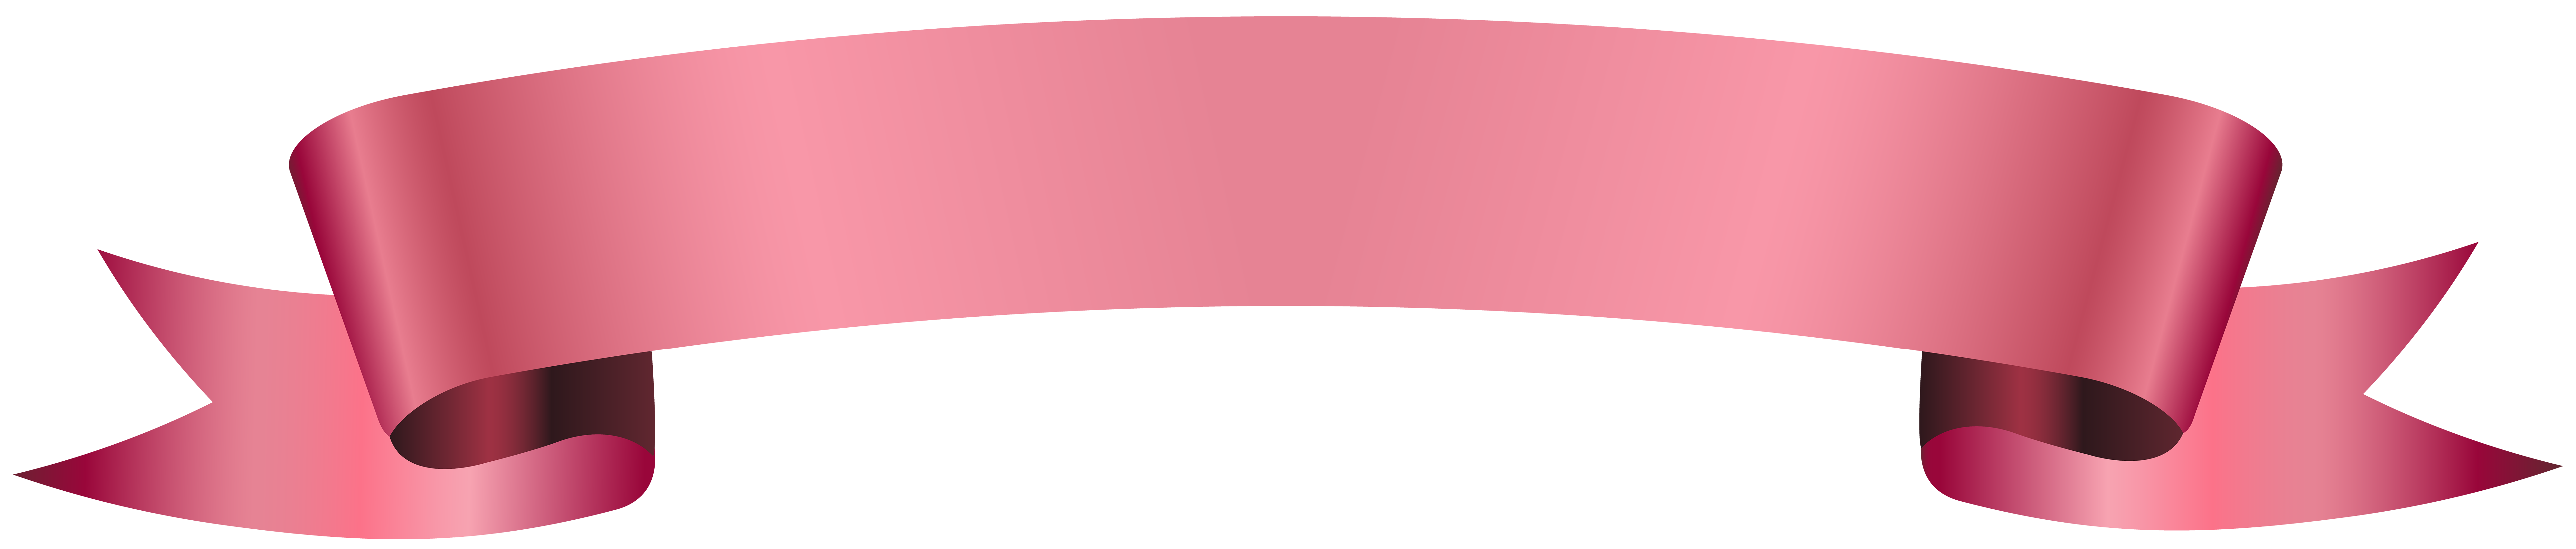 clipart banner pink